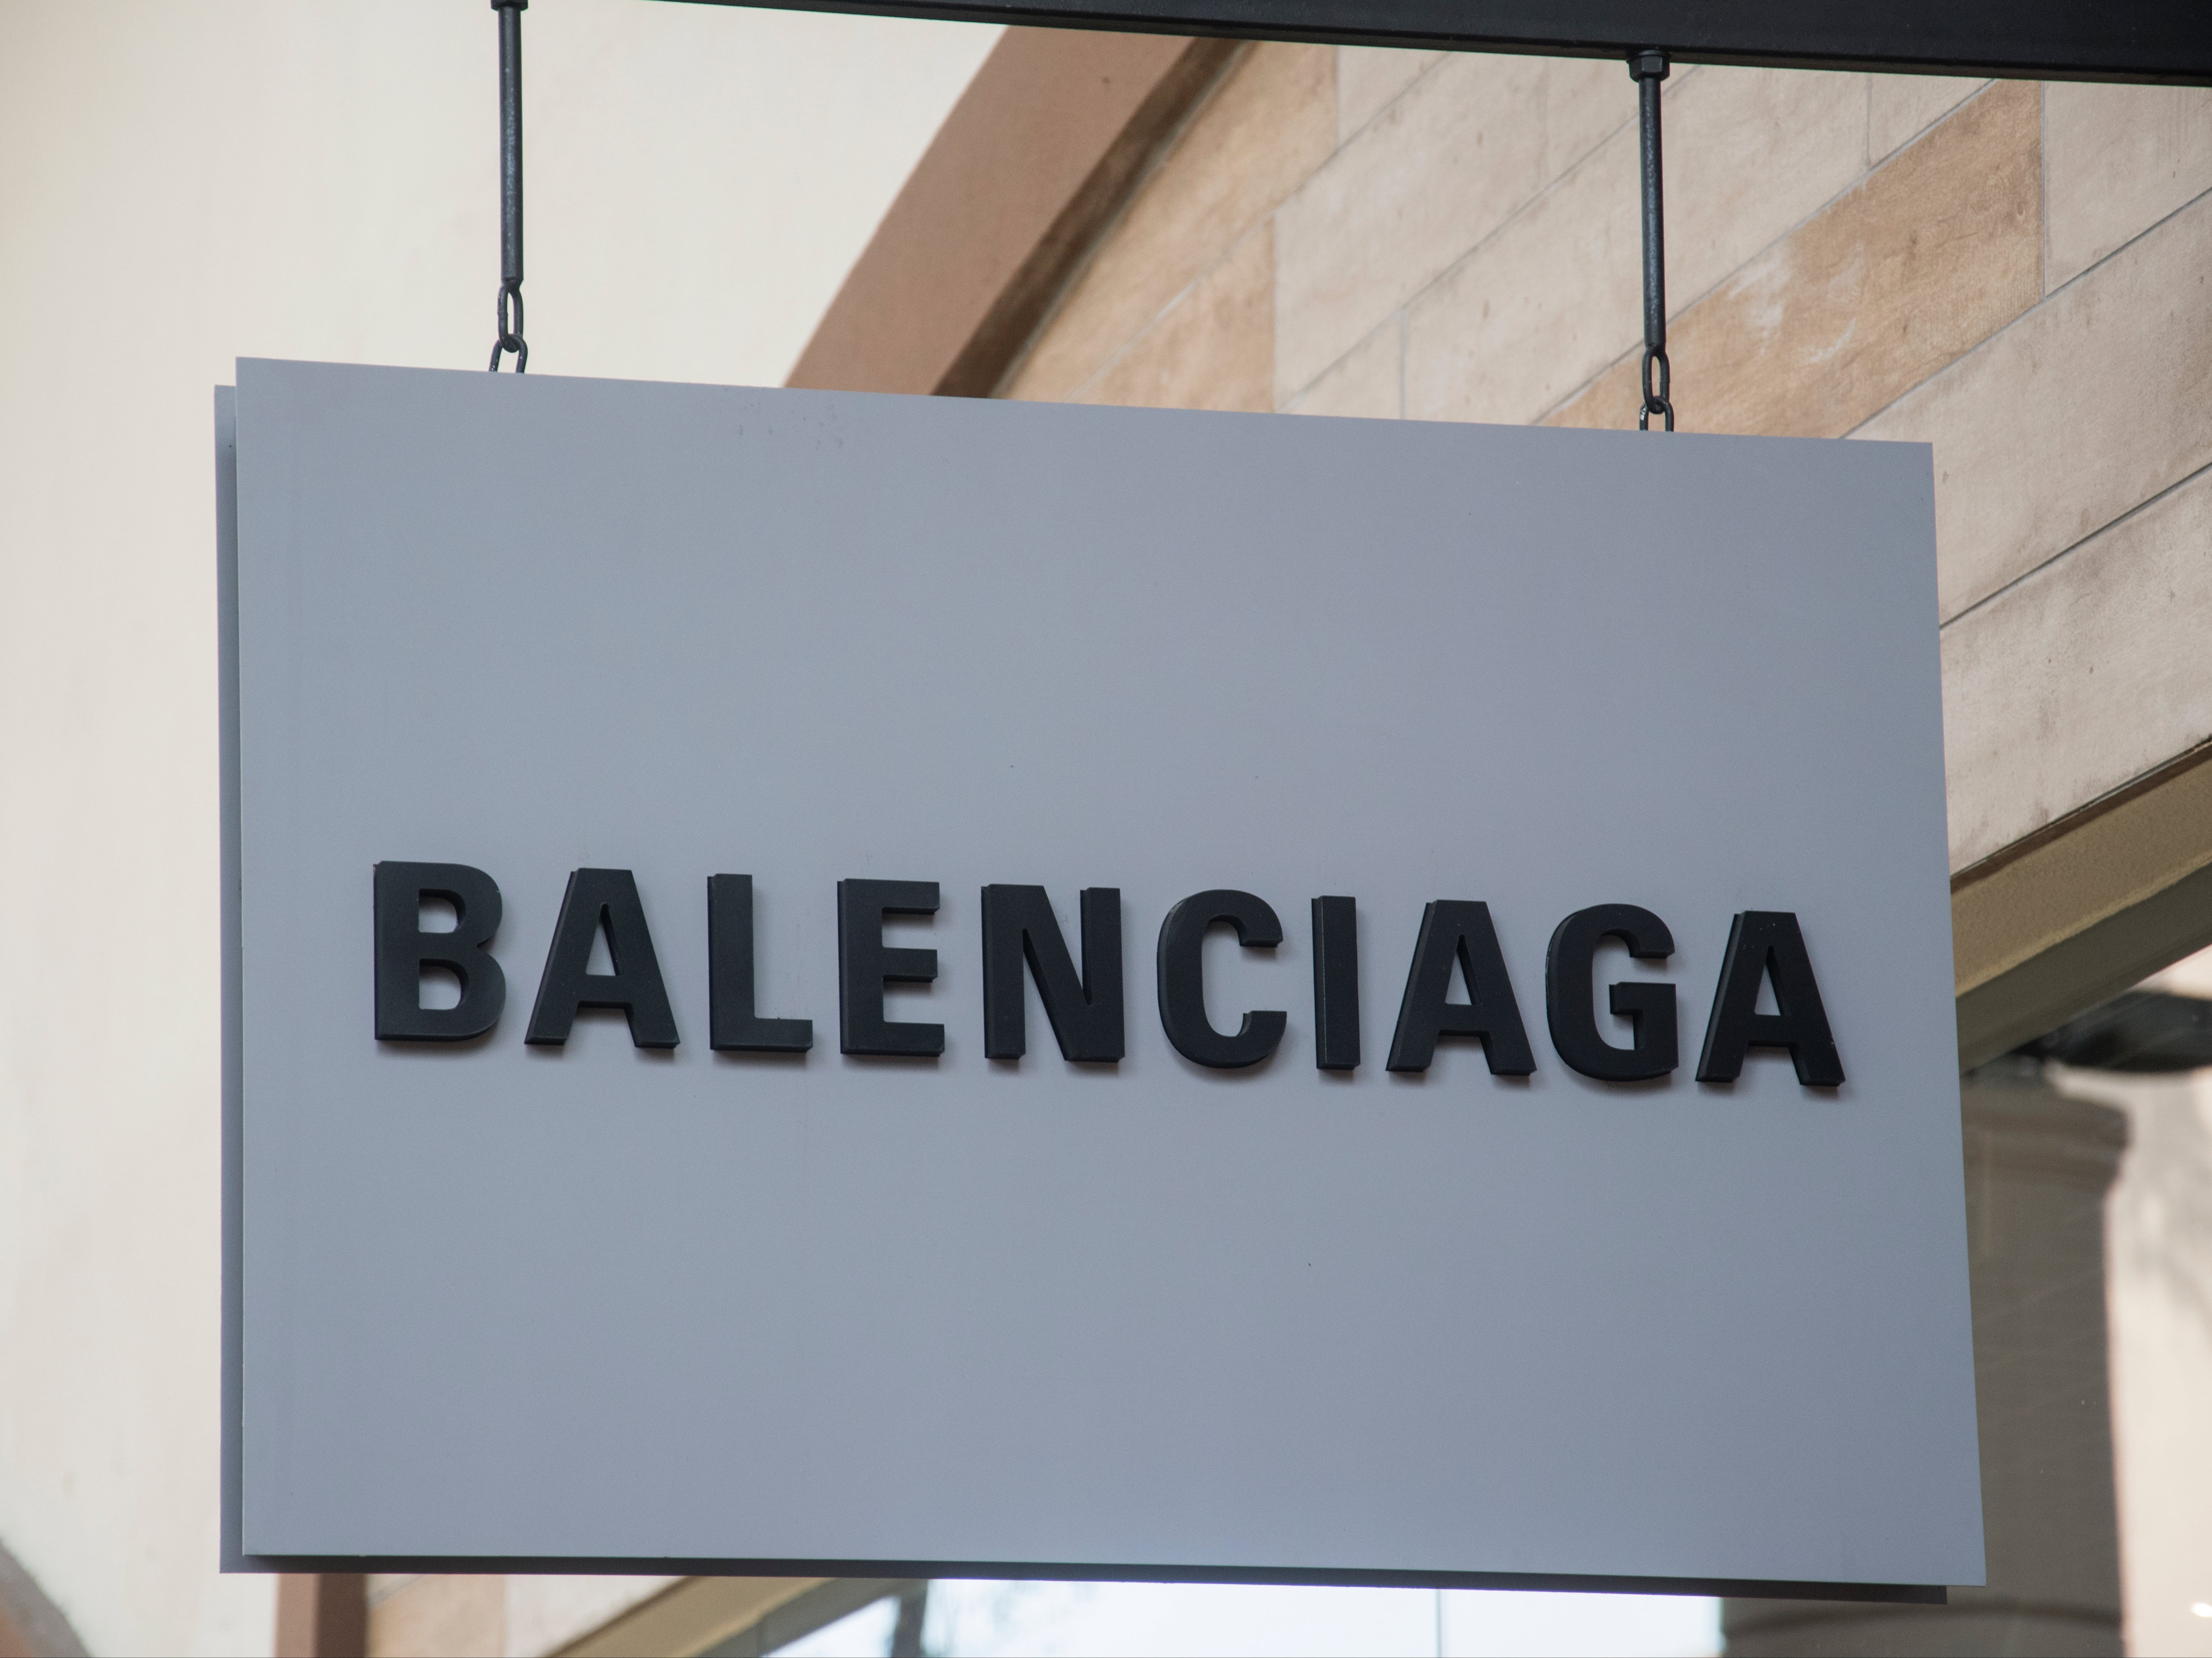 Kardashian reevaluating Balenciaga ties after controversial ads